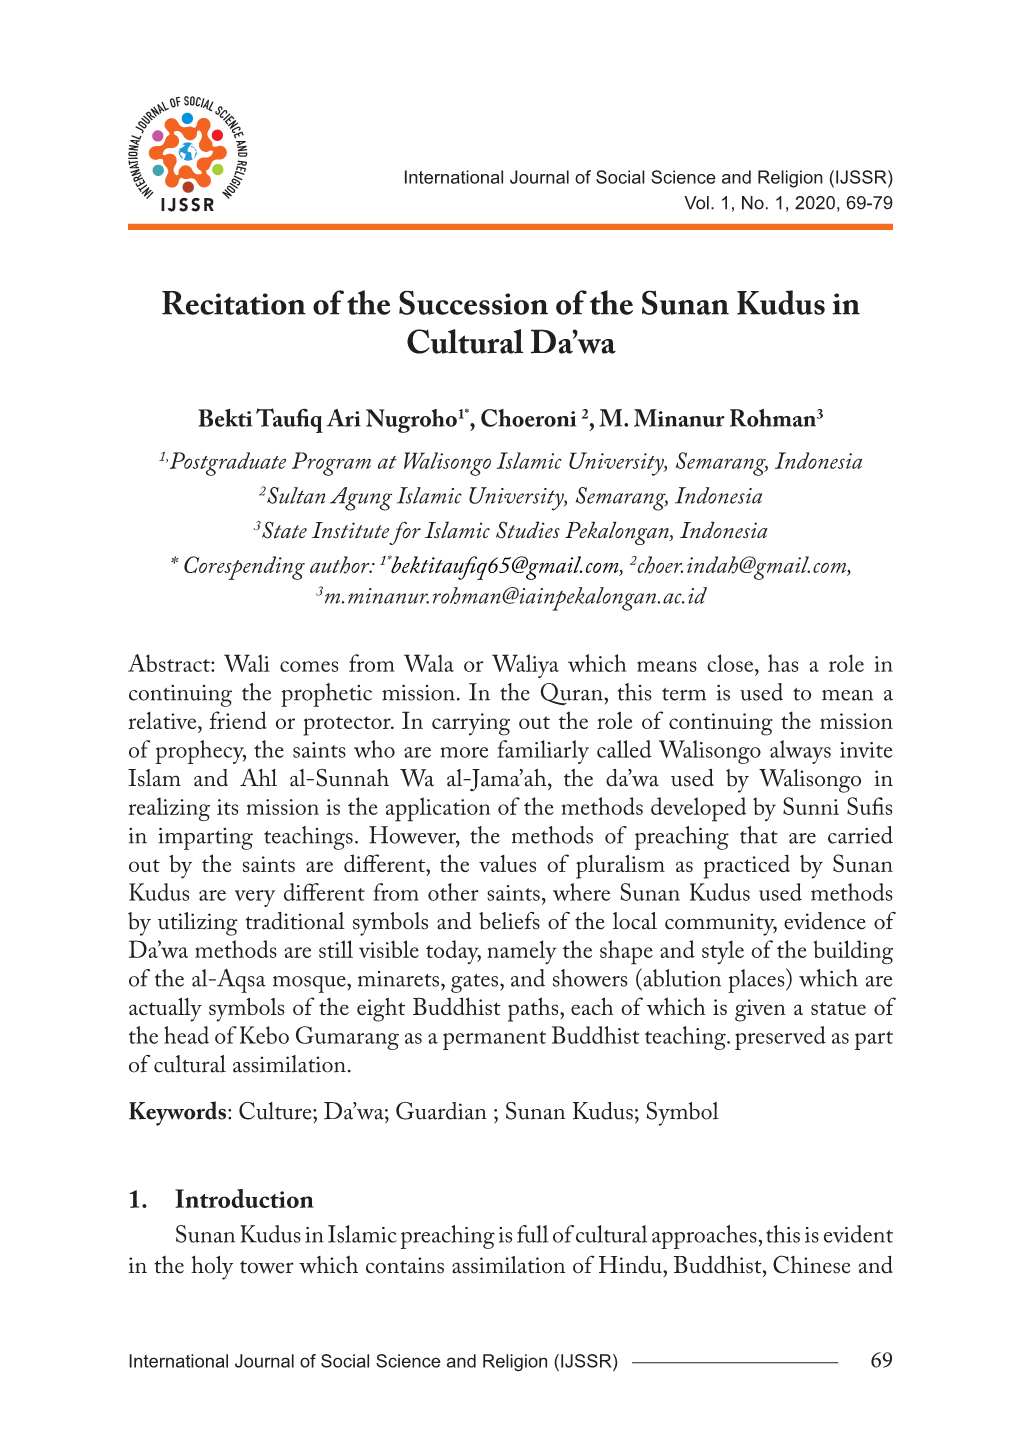 Recitation of the Succession of the Sunan Kudus in Cultural Da'wa